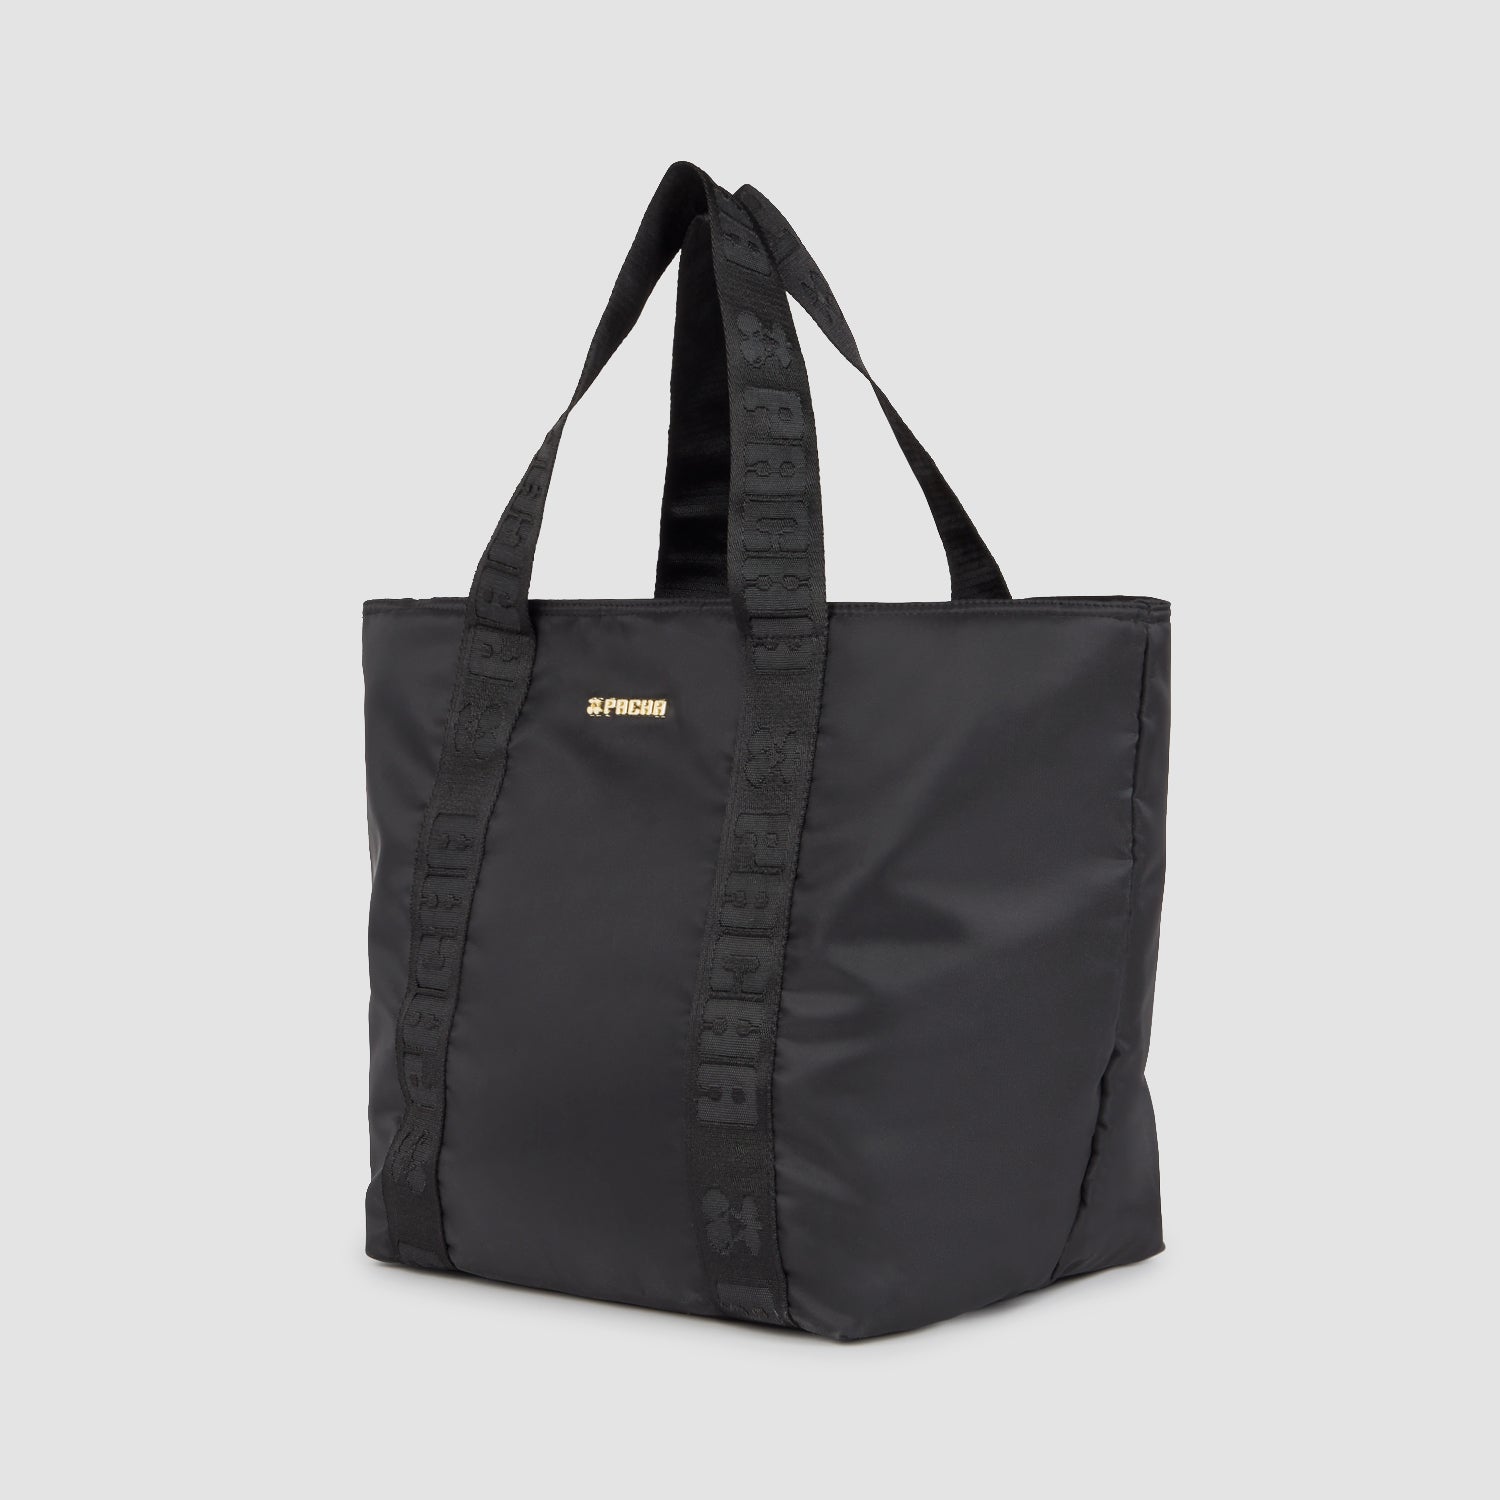 Pacha Black Shopper Bag